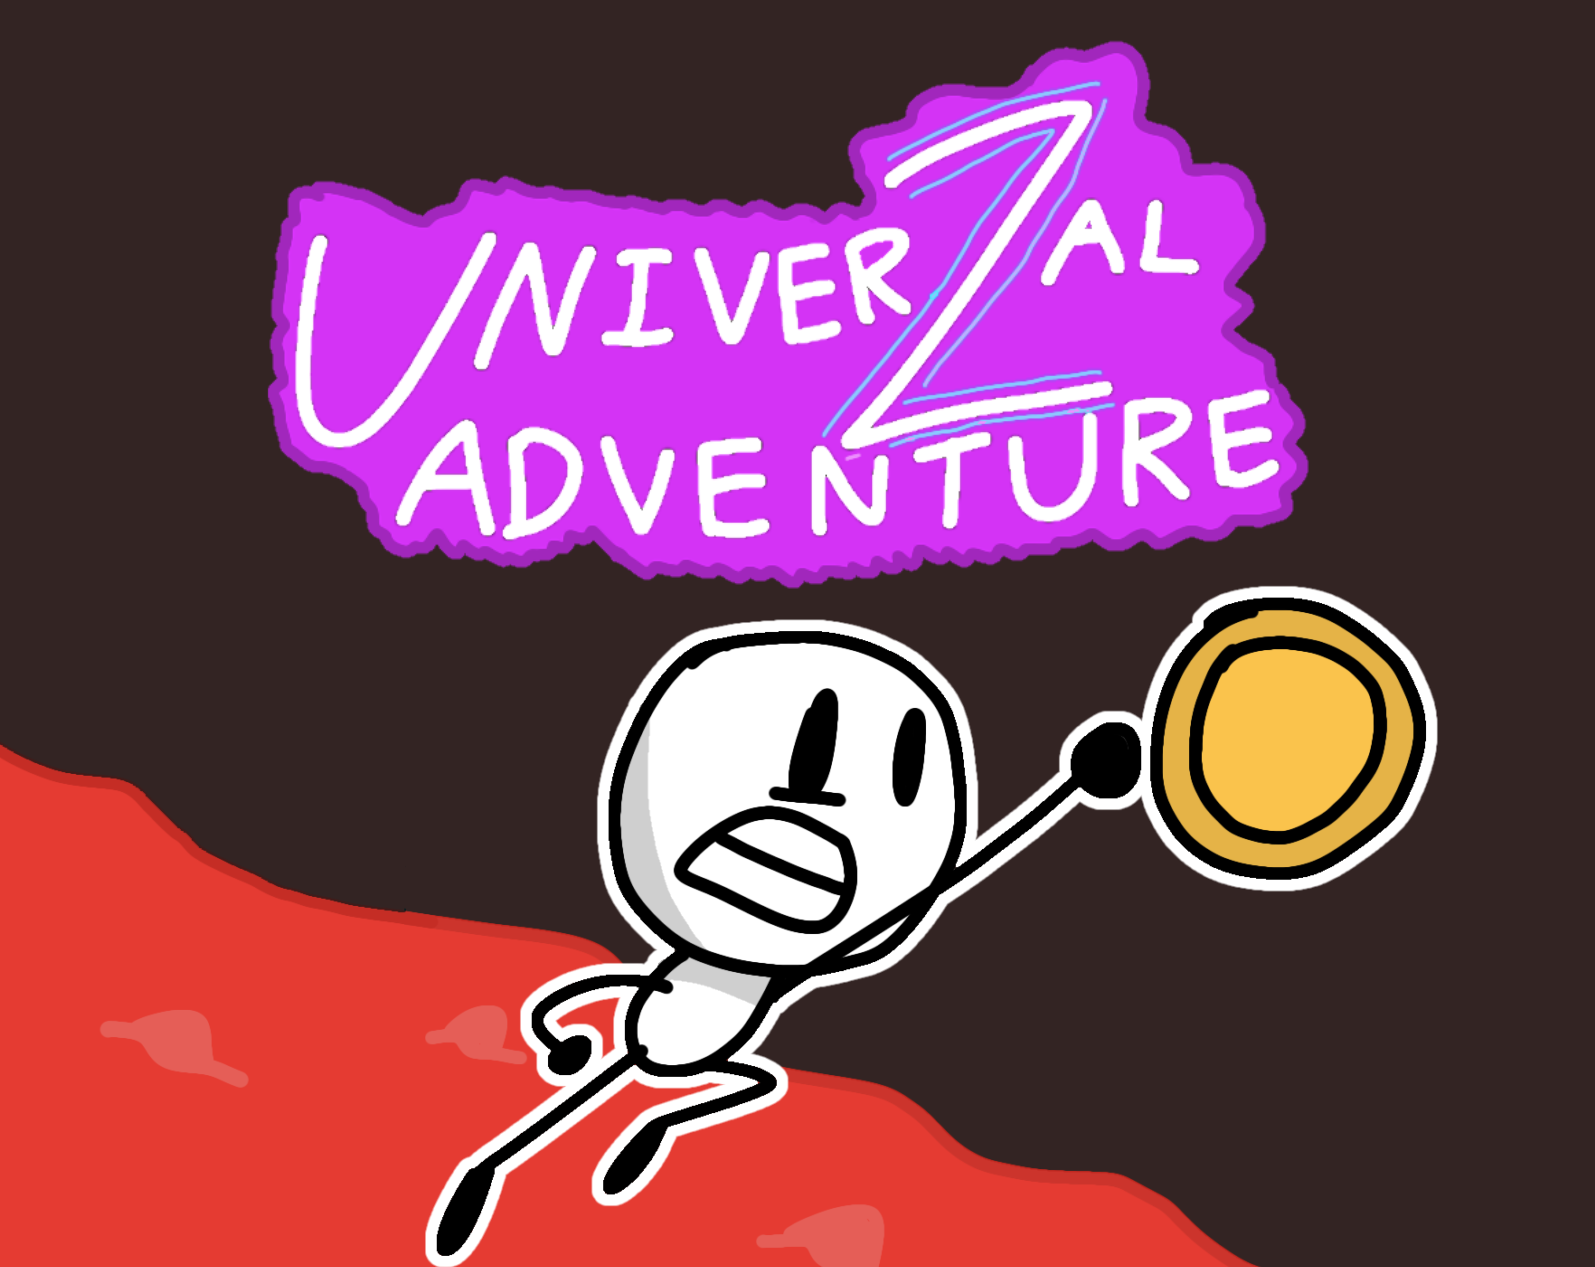 Univerzal Adventure